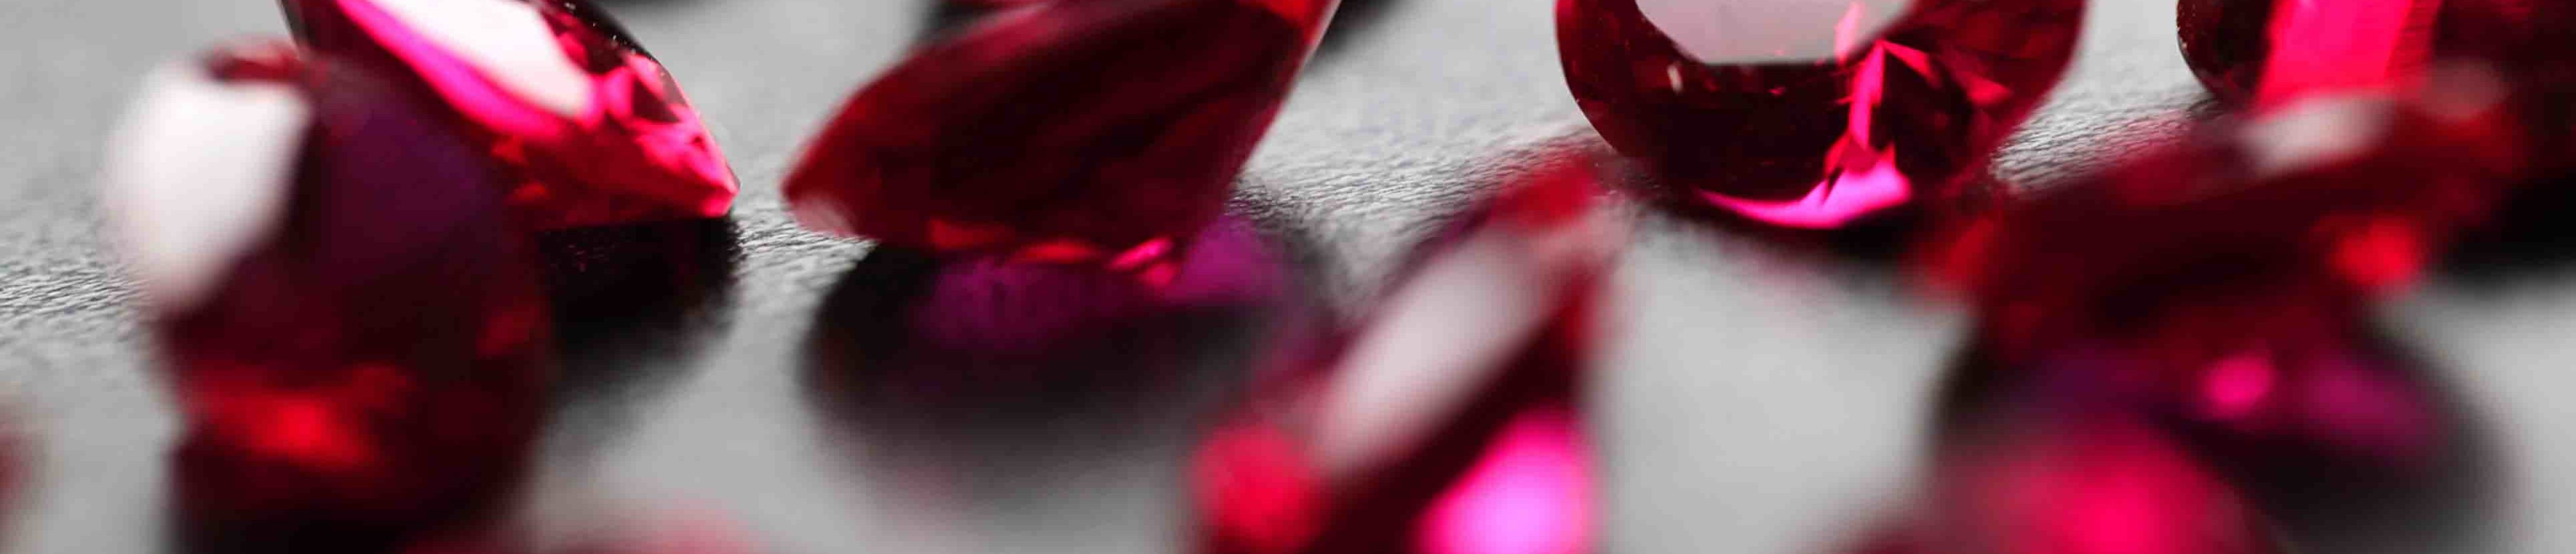 rubies close up